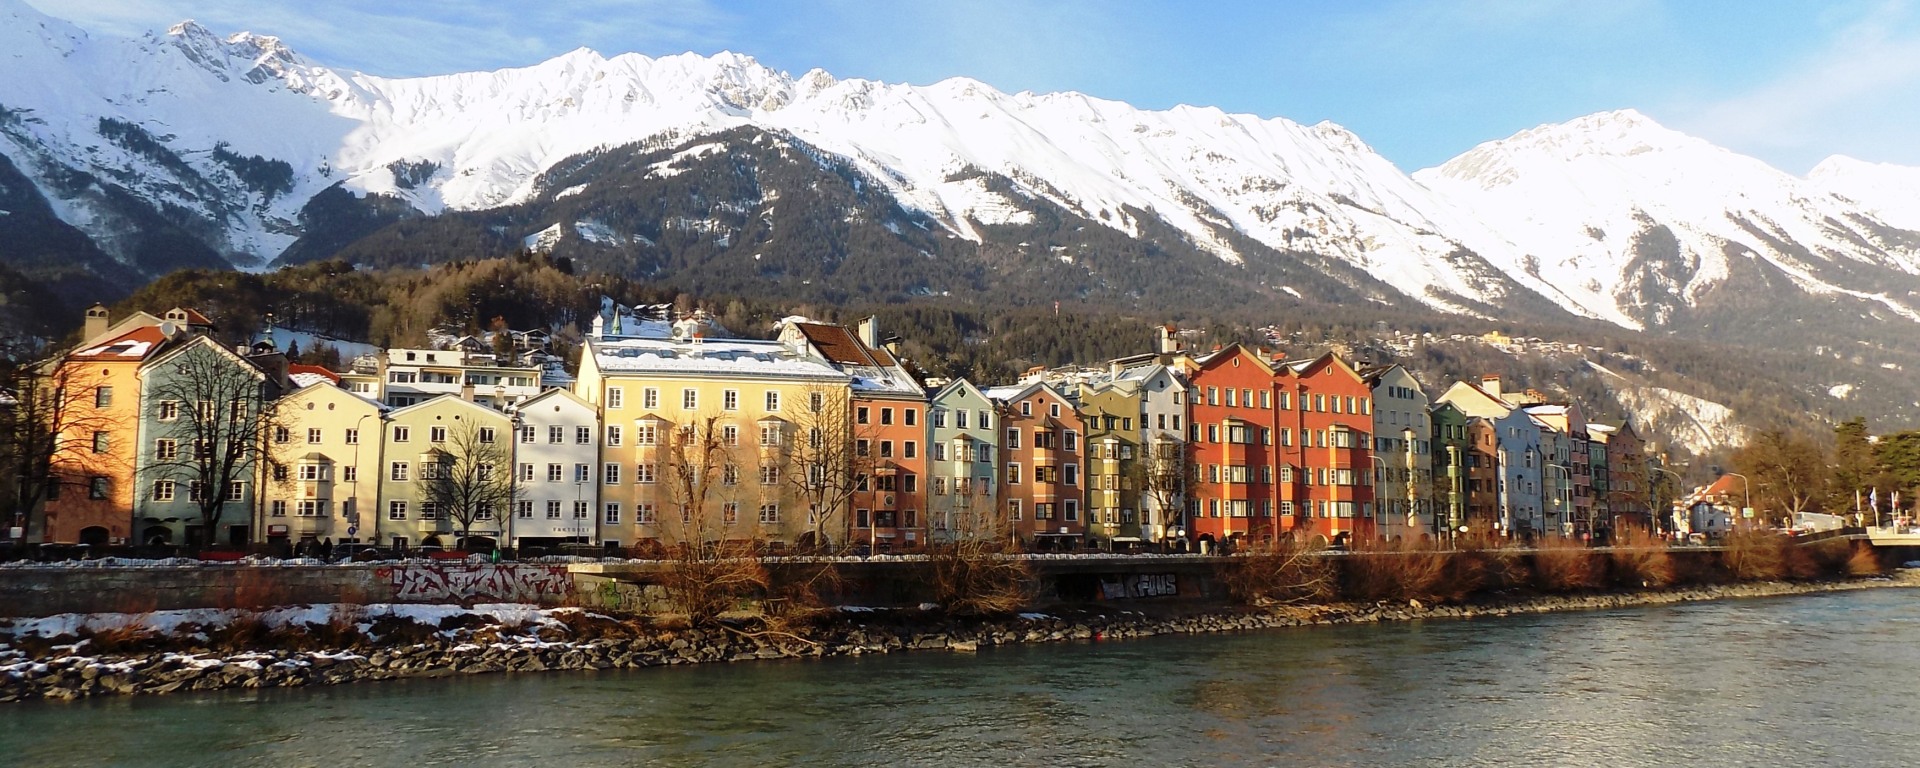 7 Jam Di Innsbruck